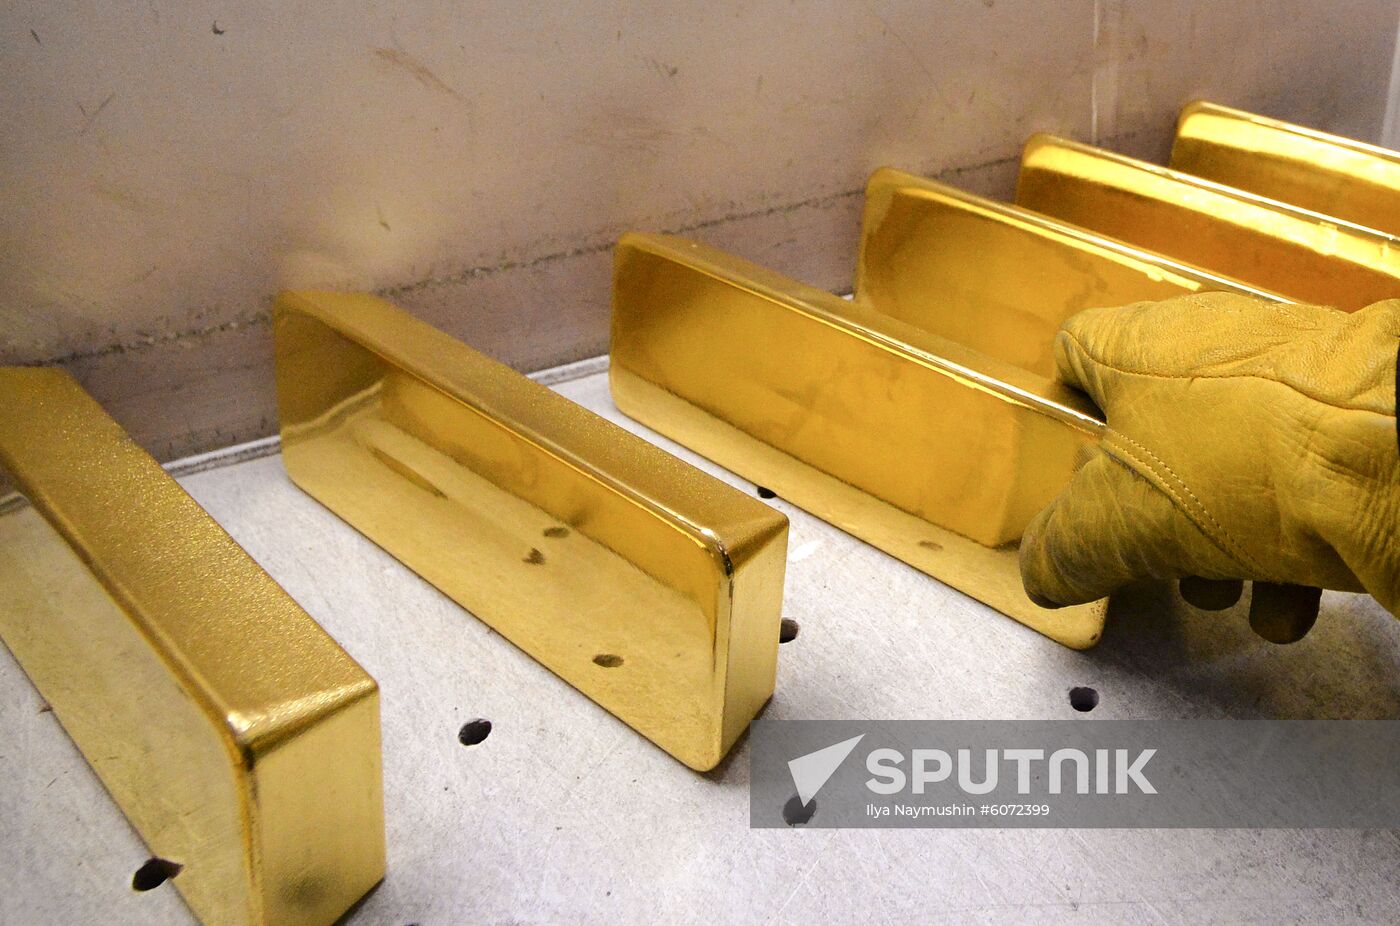 Russia Gold